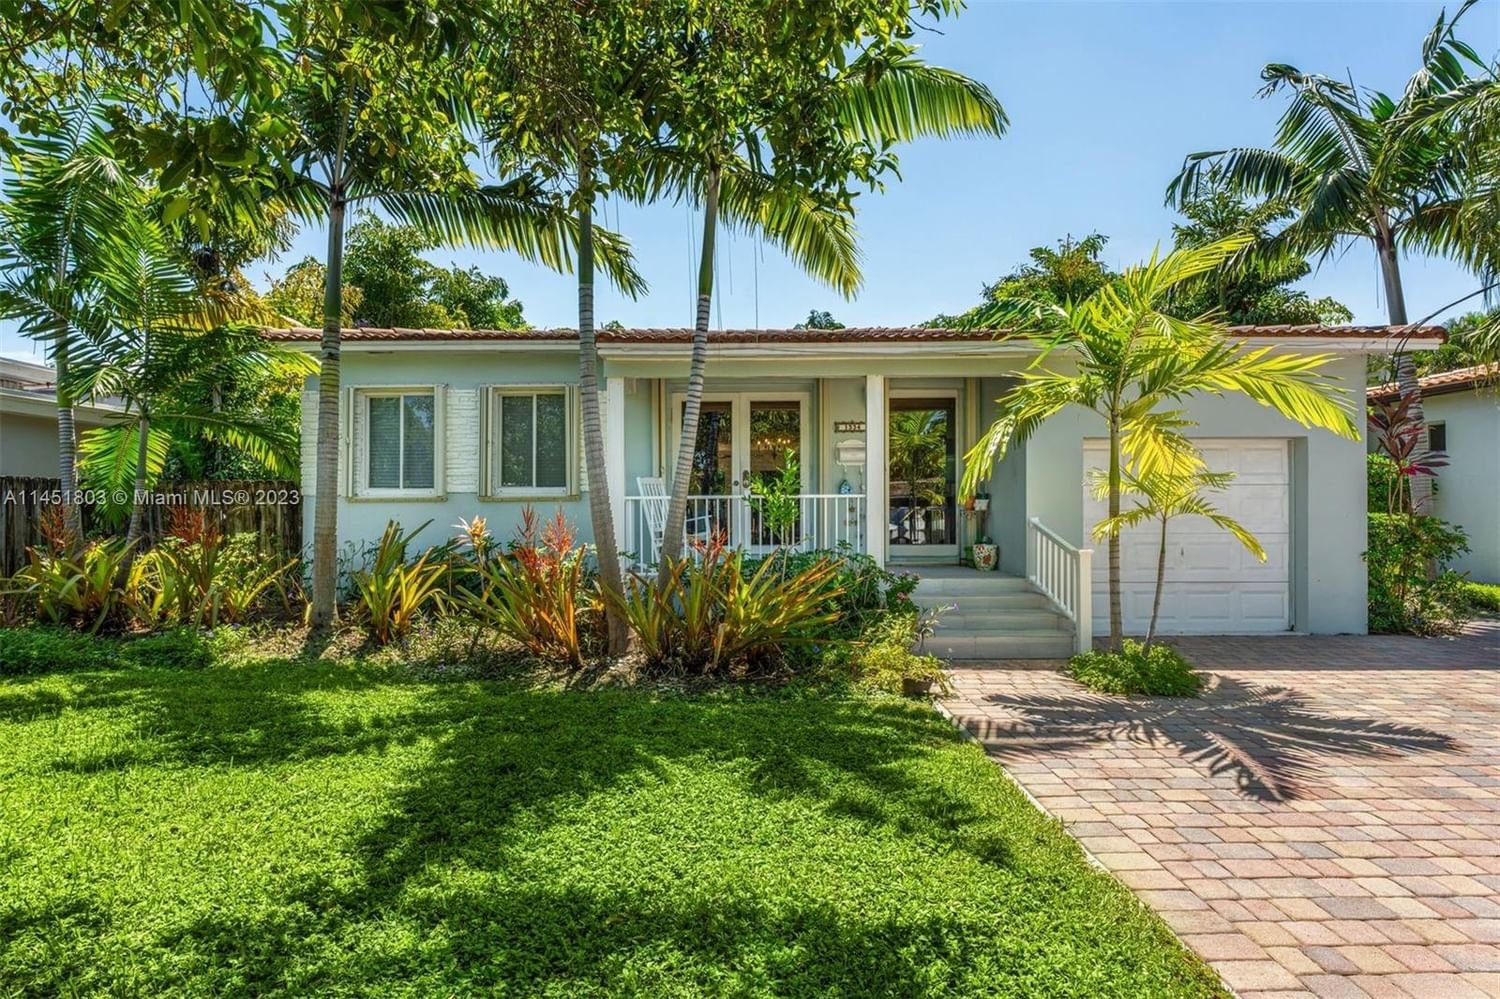 Real estate property located at 1334 Daytonia Rd, Miami-Dade County, Miami Beach, FL